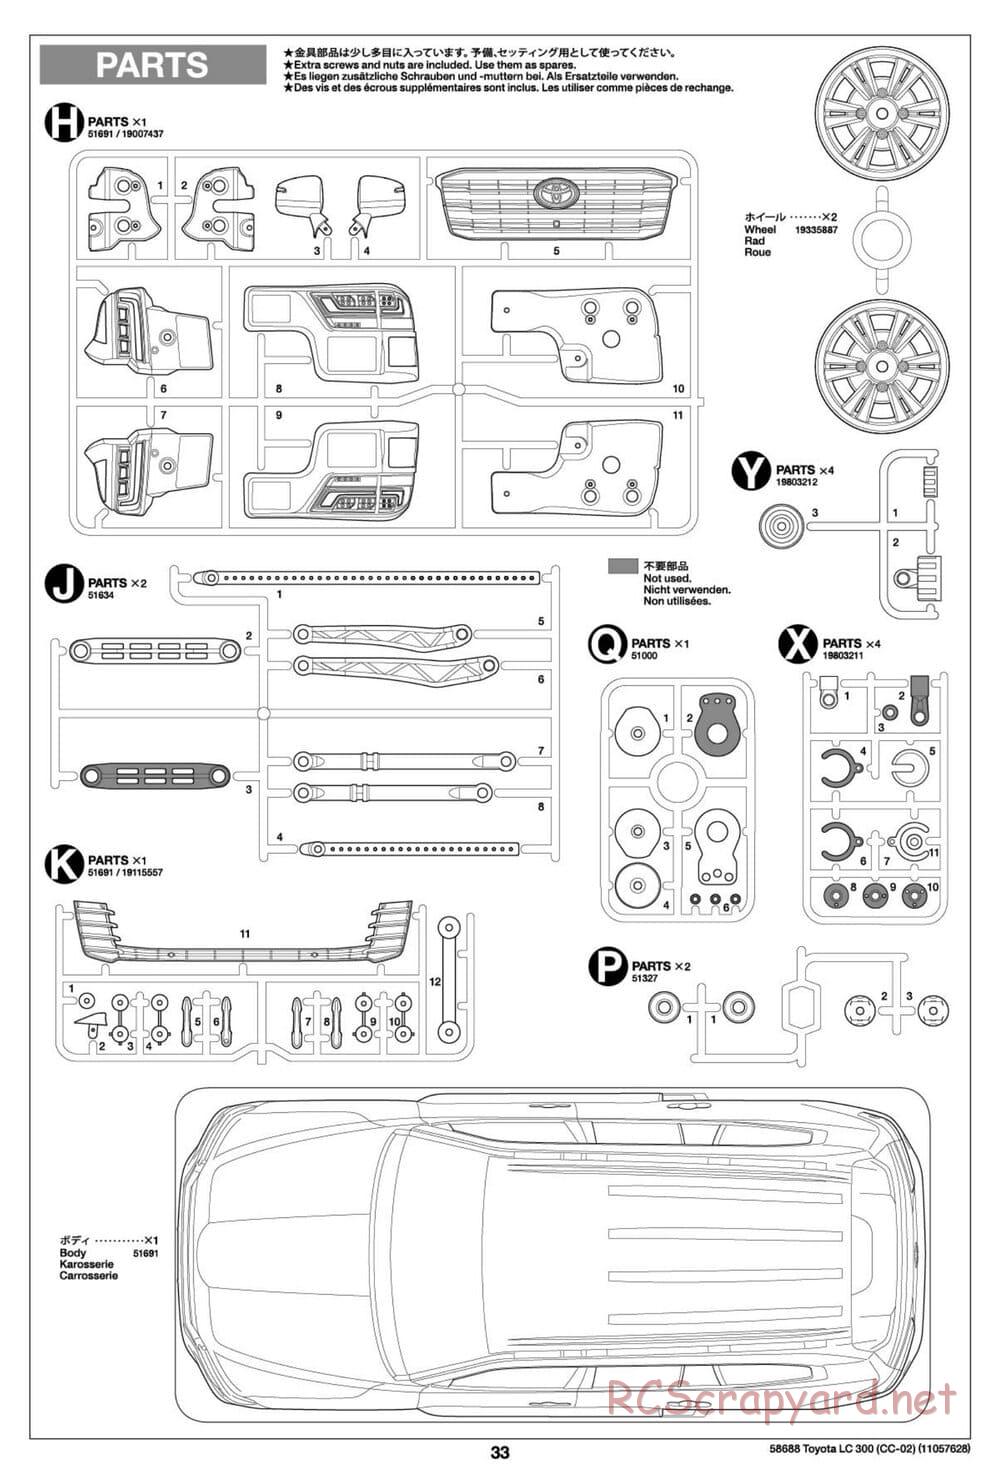 Tamiya - Toyota Land Cruiser 300 - CC-02 Chassis - Manual - Page 33